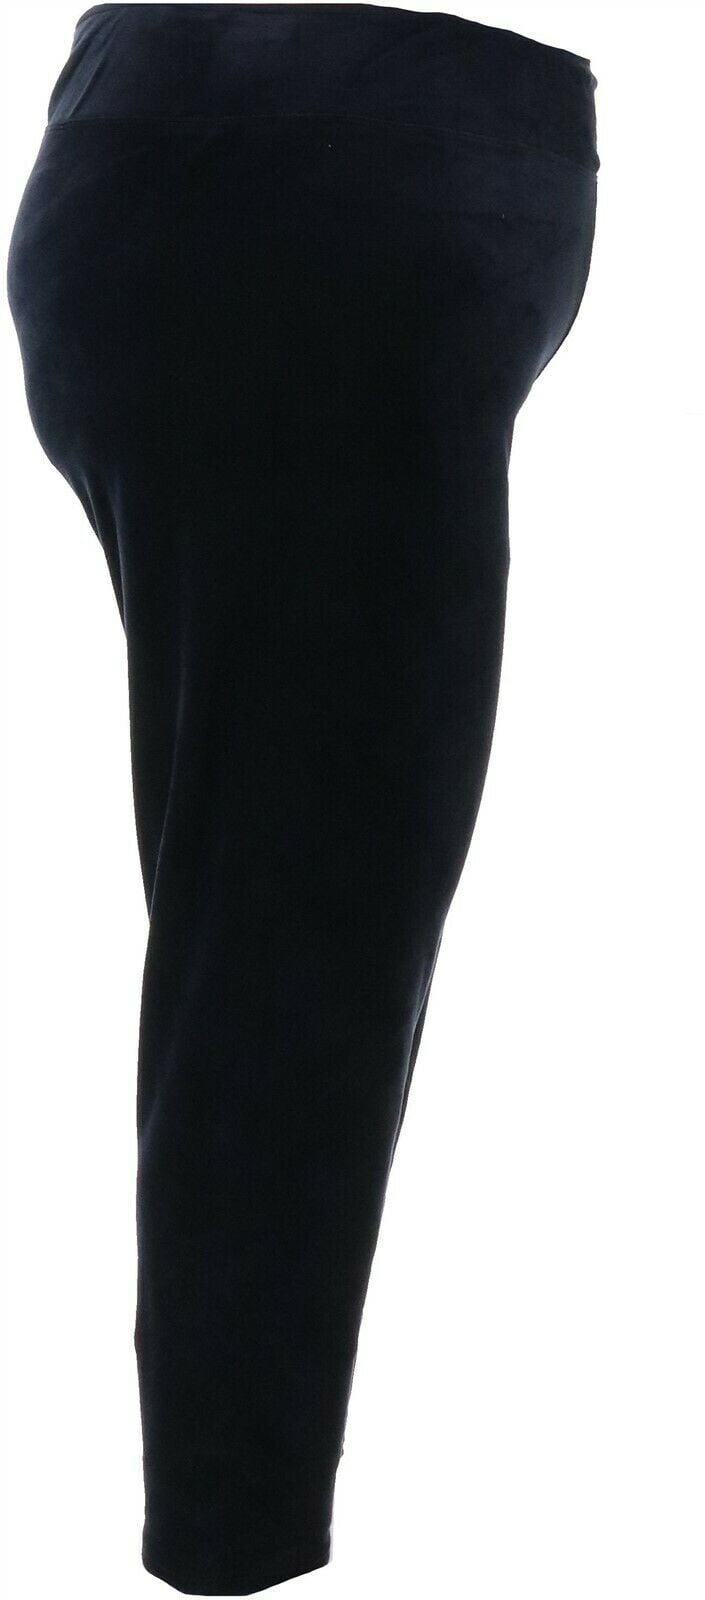 Cuddl Duds Double Plush Velour Leggings Elastic Waistband Black L NEW A293100